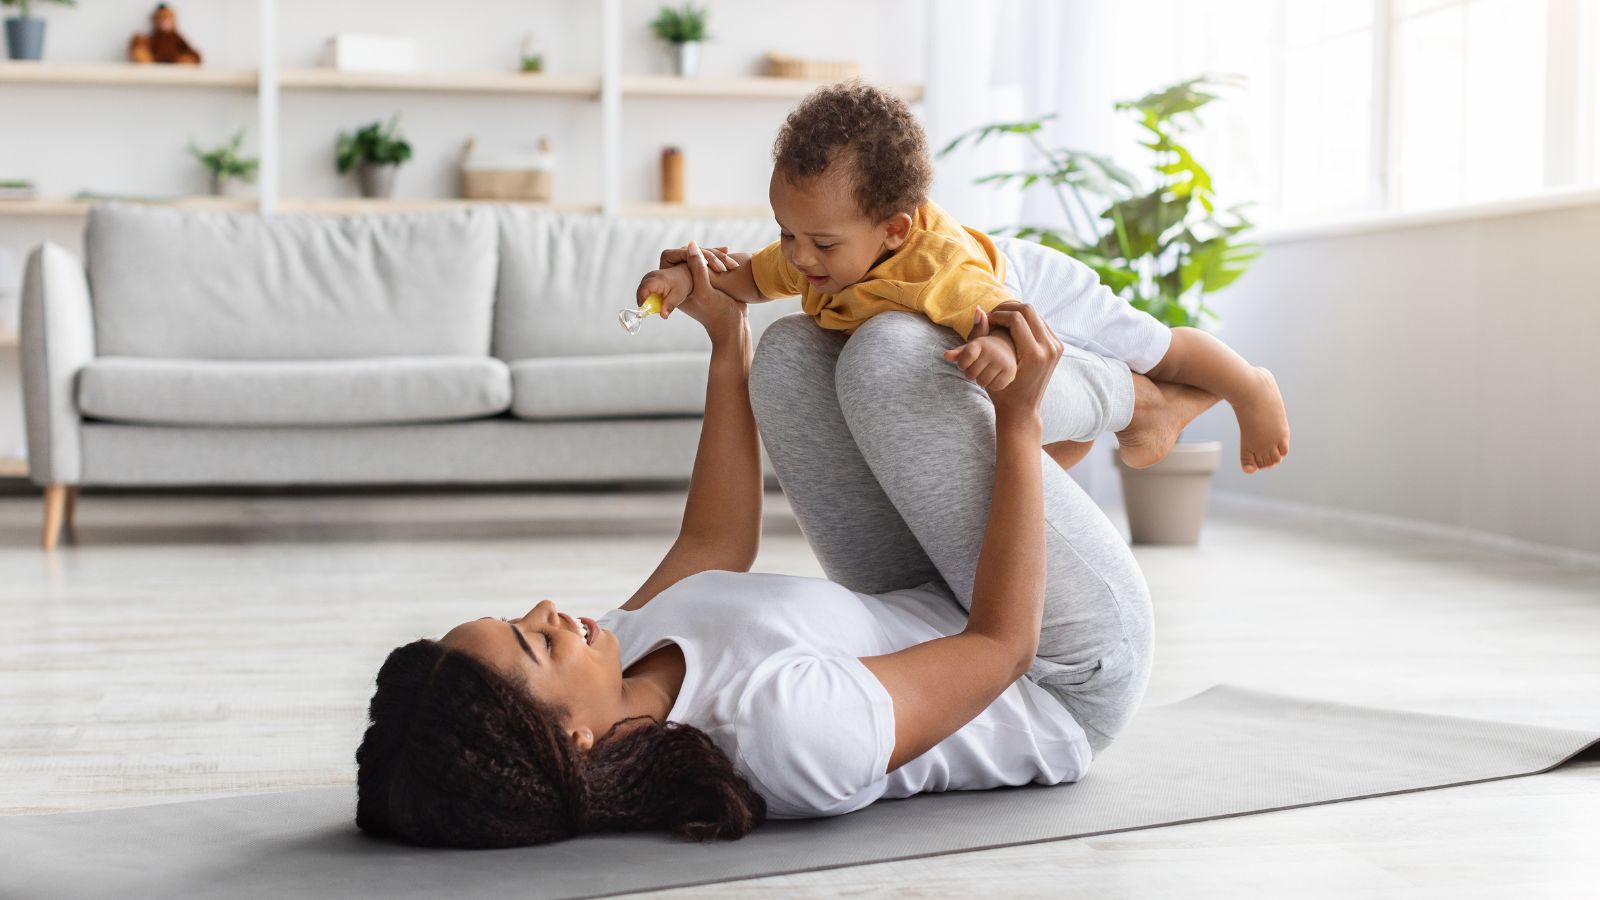 What are some Postpartum exercises?